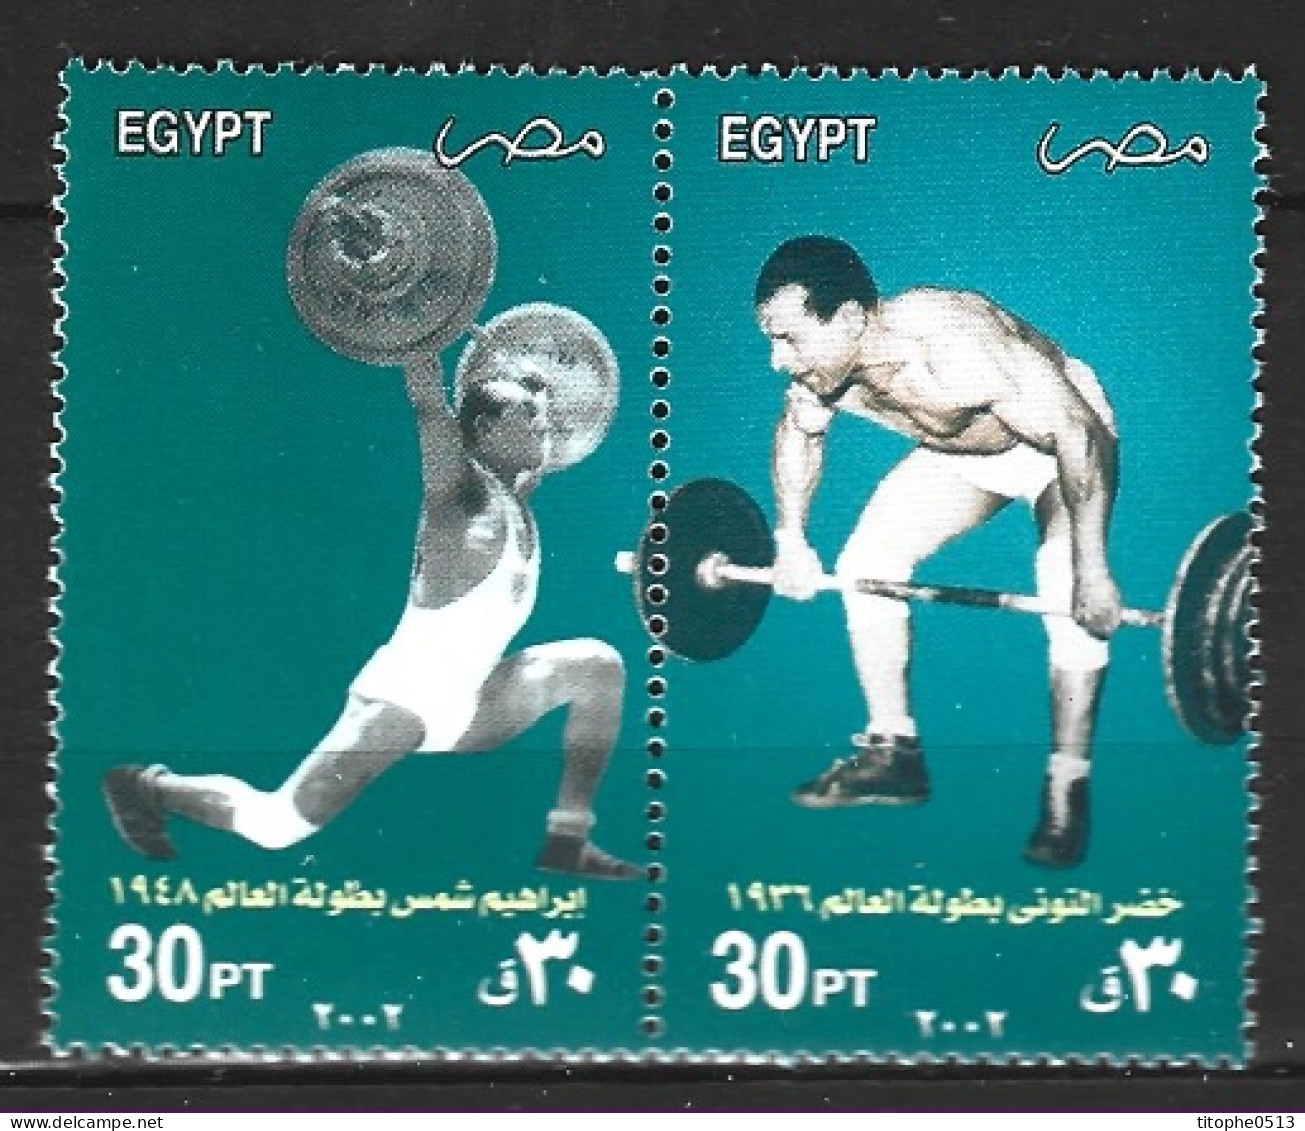 EGYPTE. N°1724-5 De 2002. Haltérophilie. - Gewichtheben